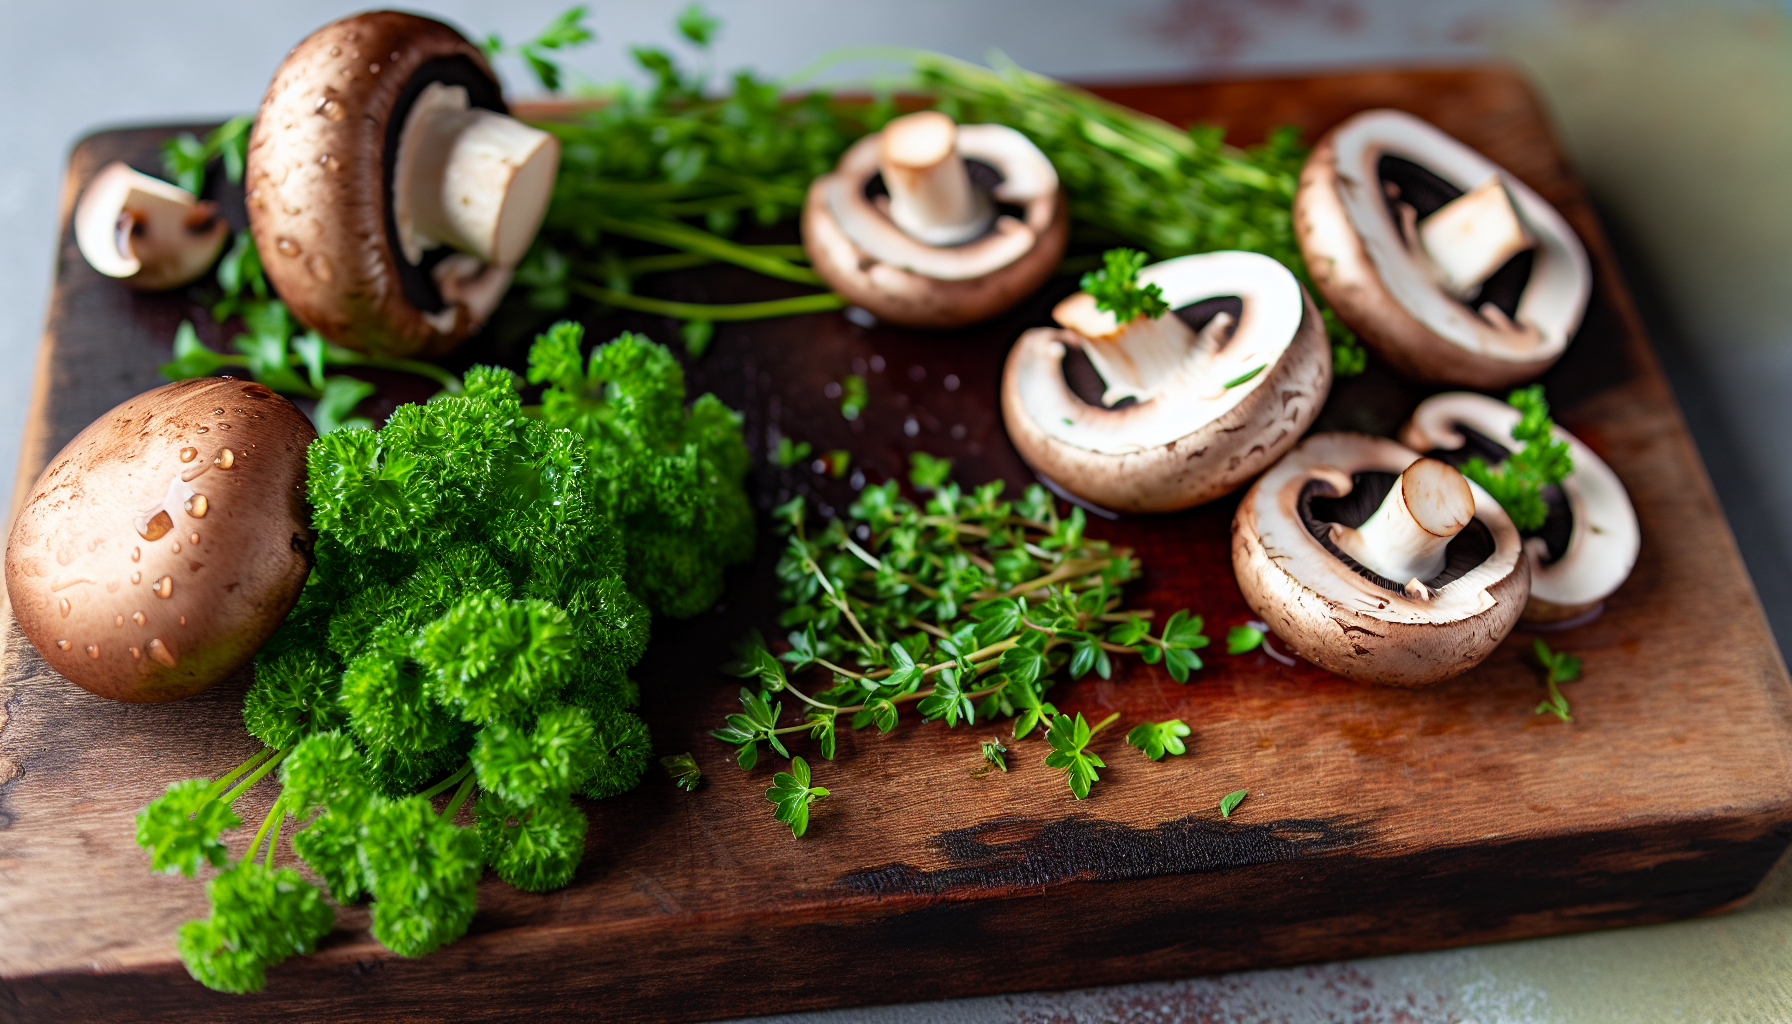 Assortment of fresh herbs and sliced mushrooms